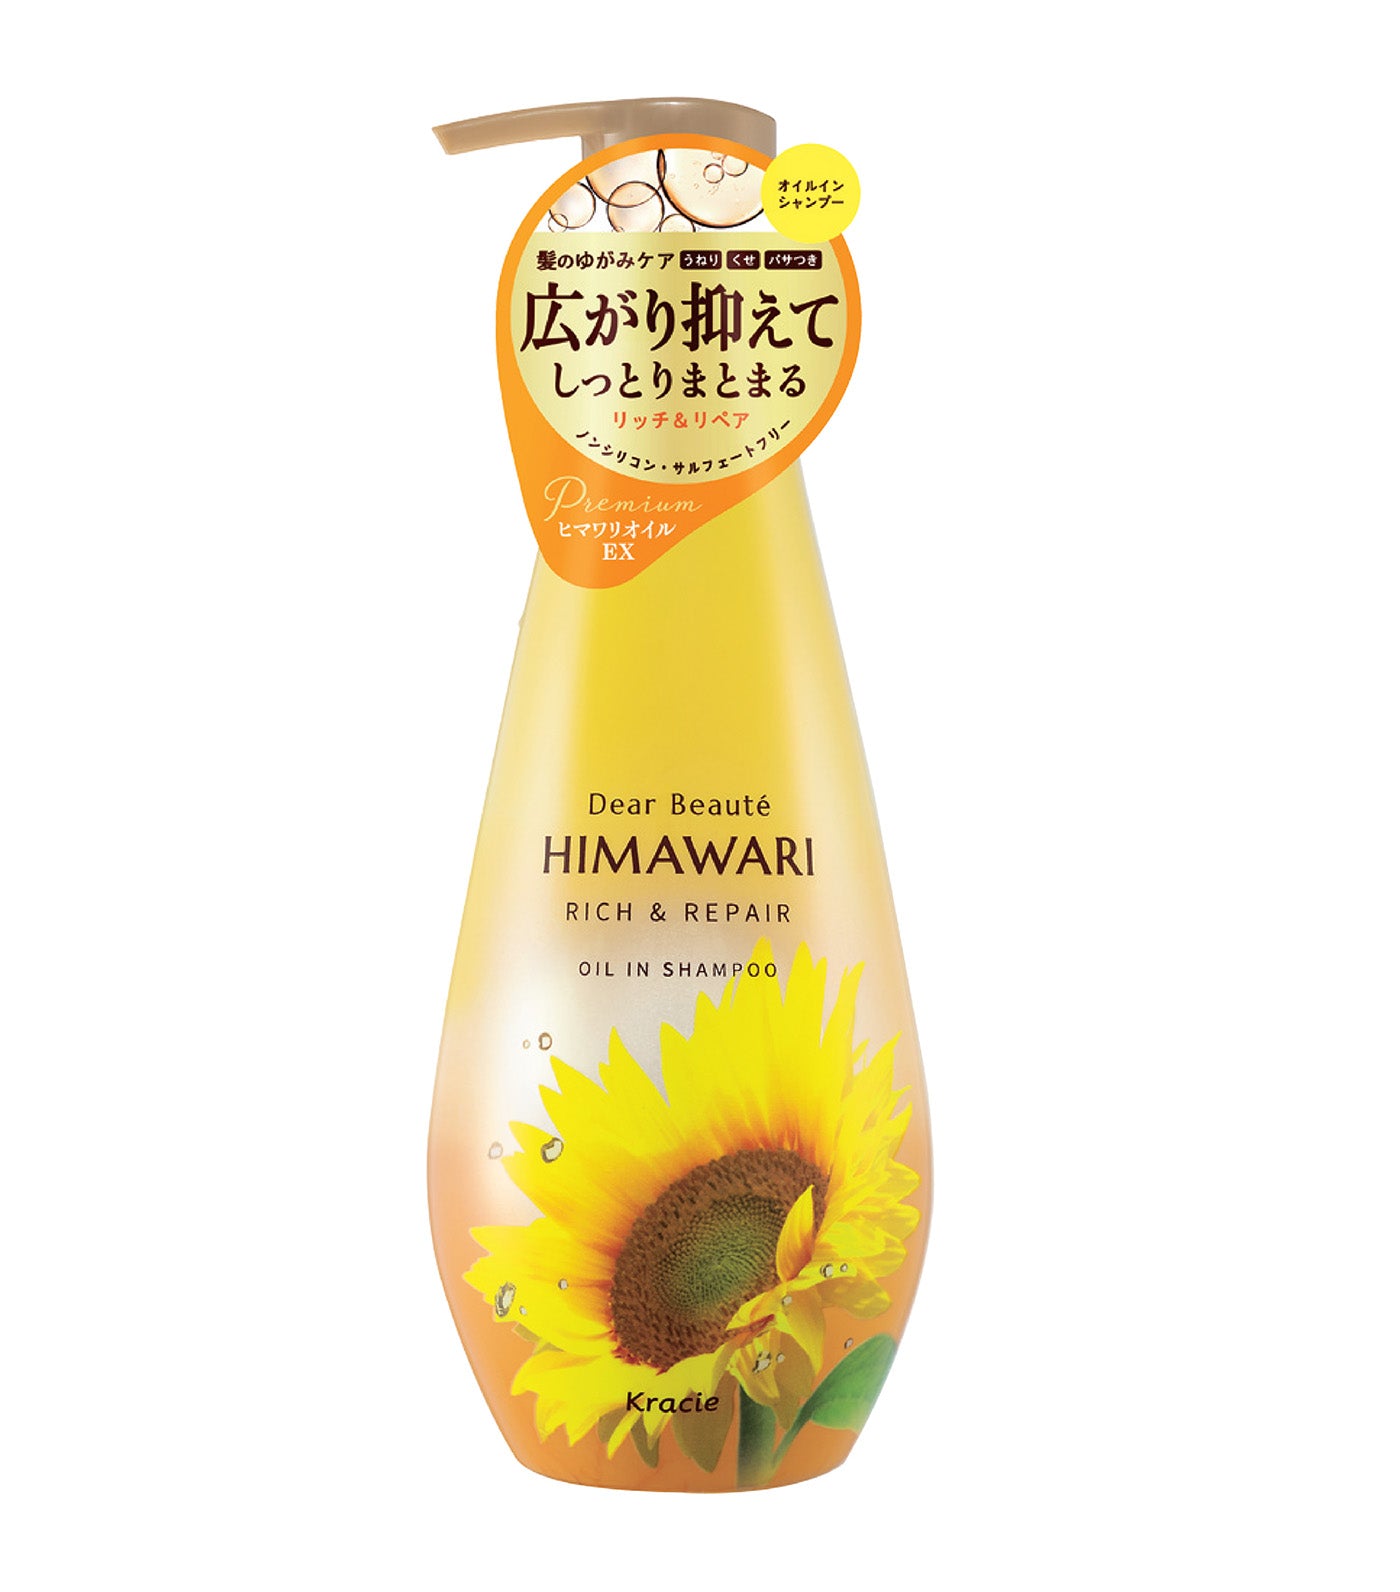 Dear Beaute Himawari Rich & Repair Oil In Shampoo